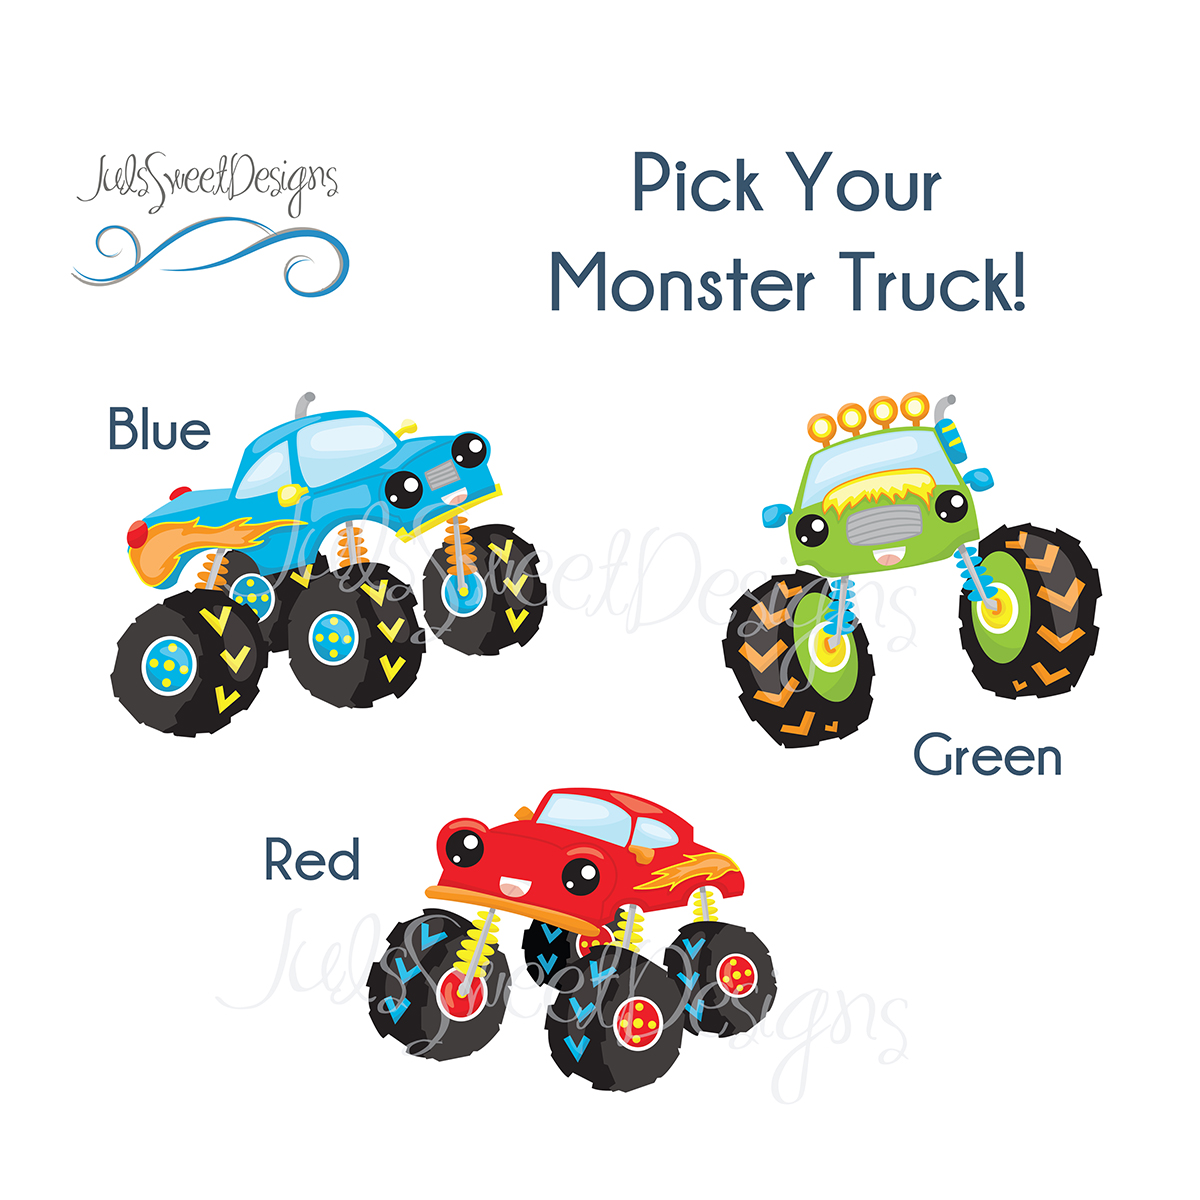 https://julssweetdesigns.com/wp-content/uploads/2019/11/Monster-Truck-with-Faces-JSD.jpg